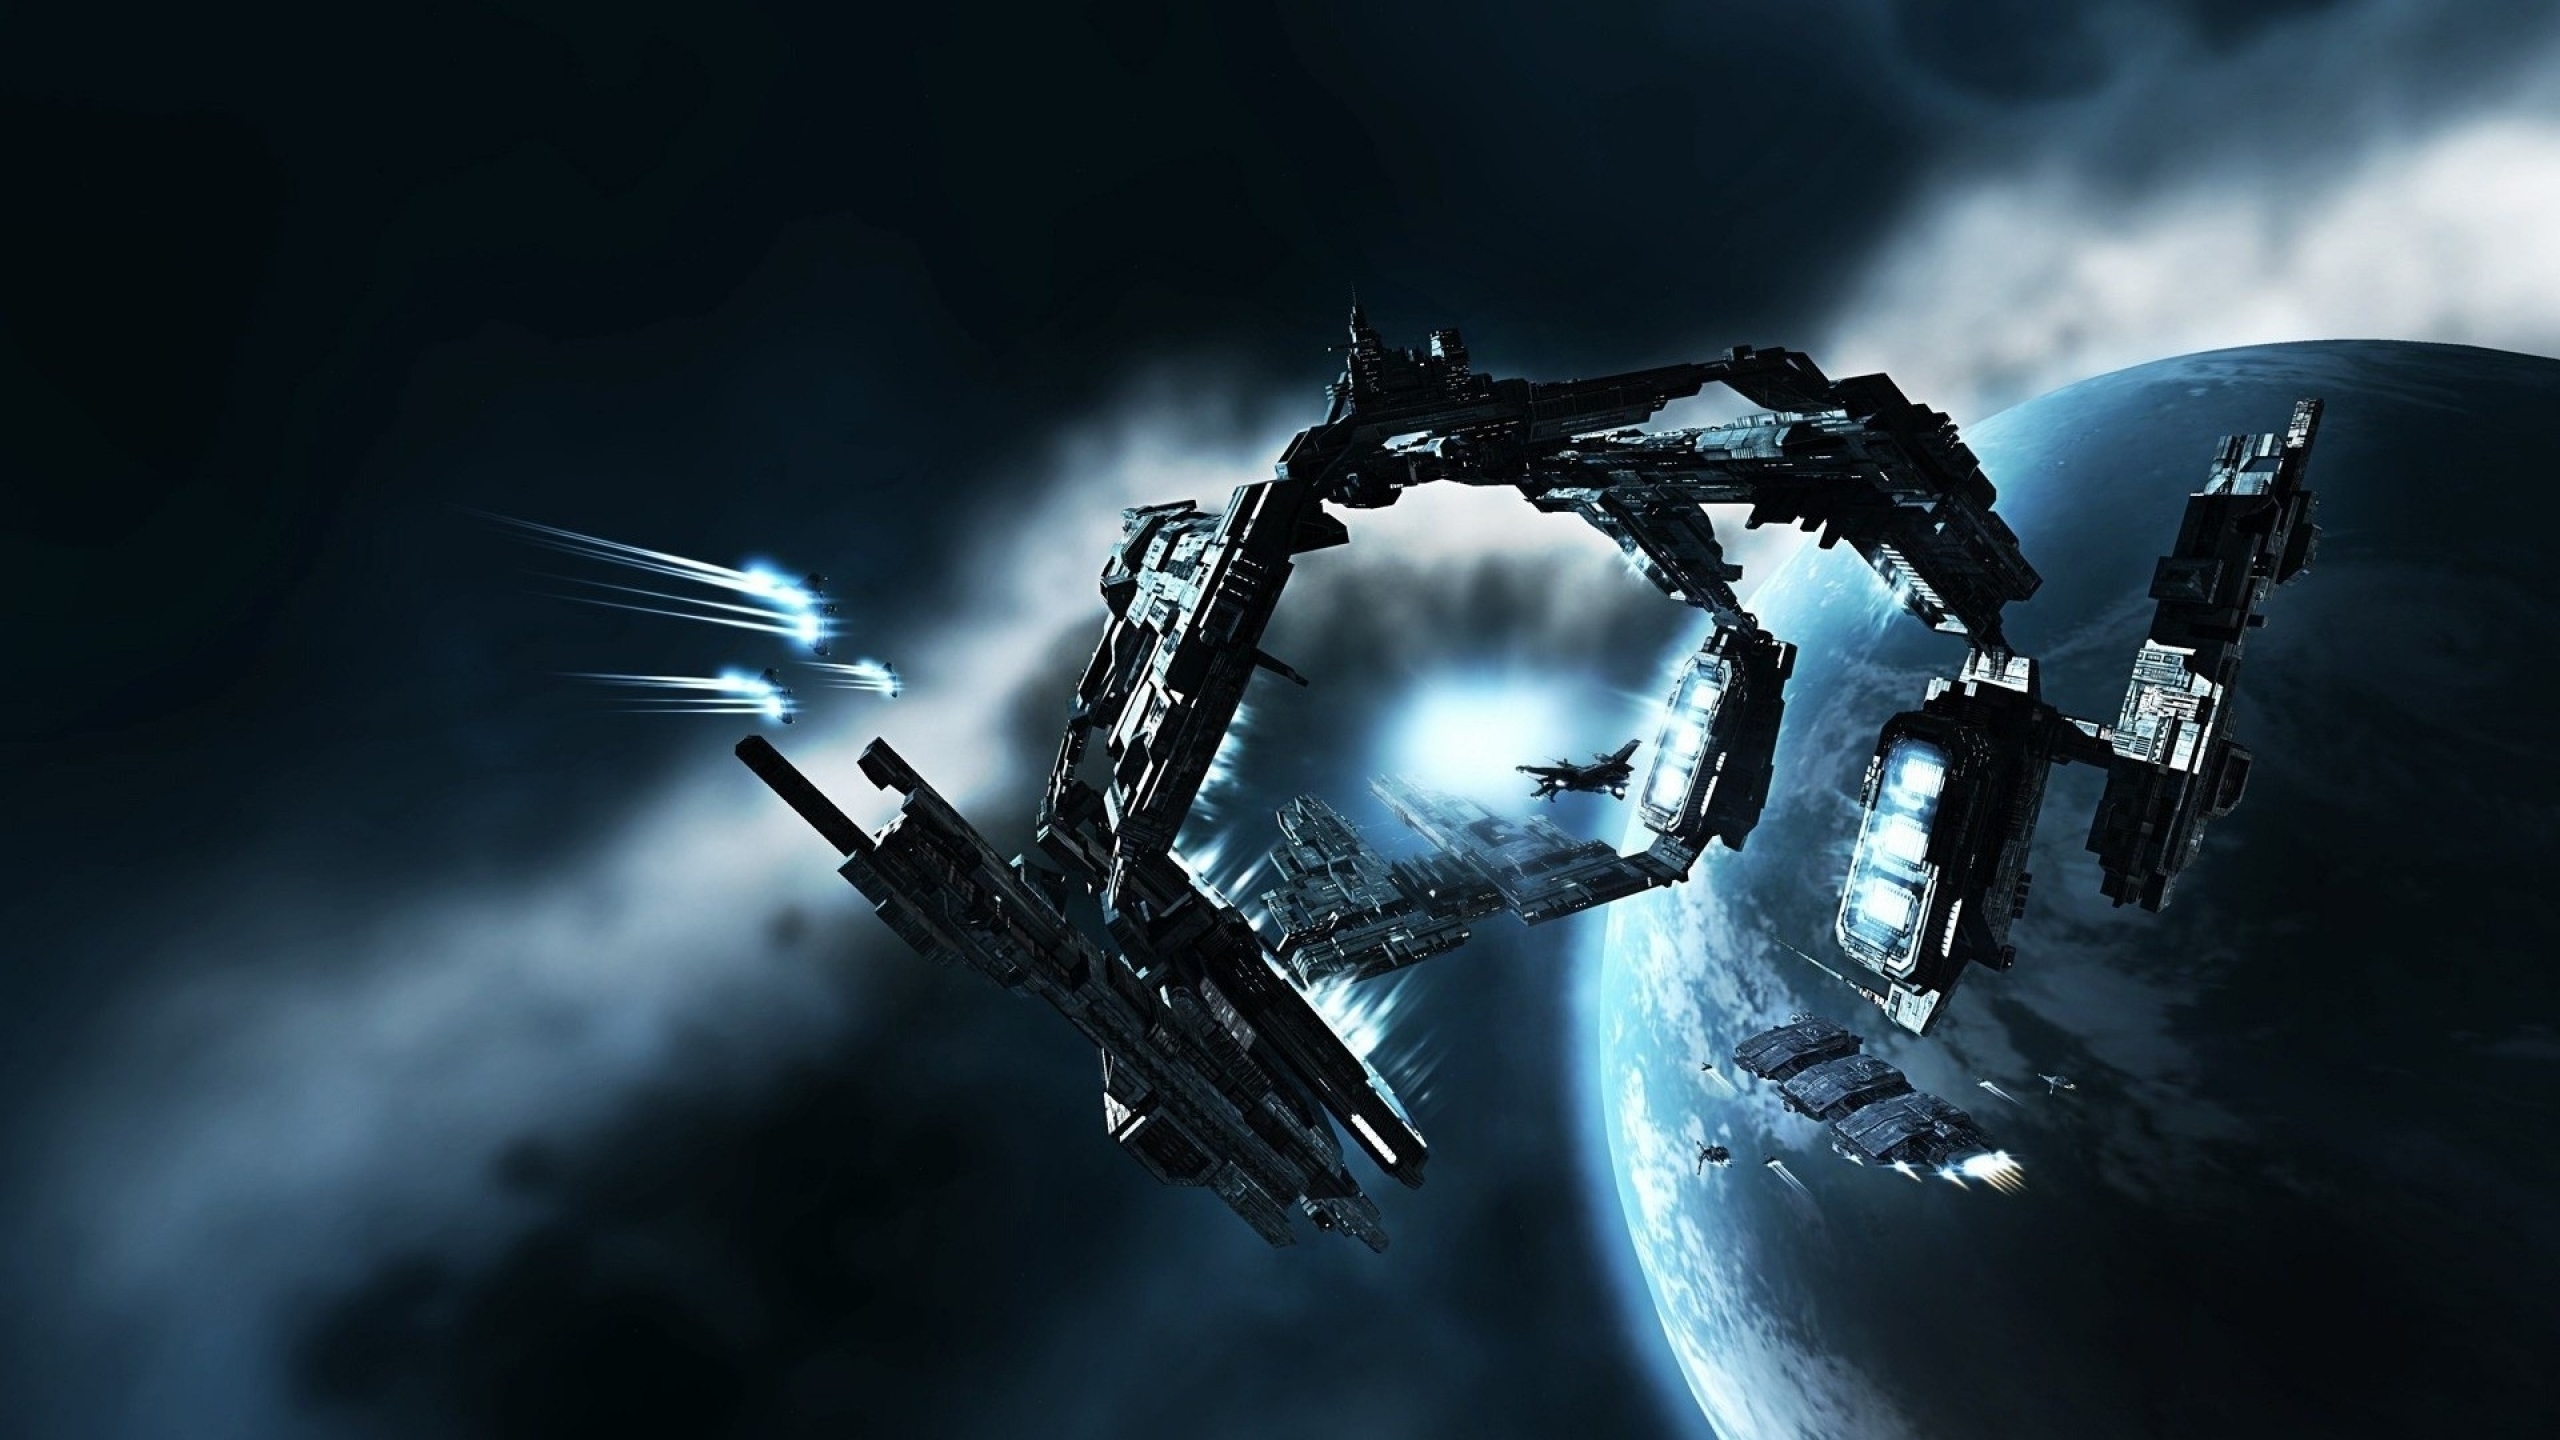 Eve Online Spaceships Wallpaper High Resolution Hi